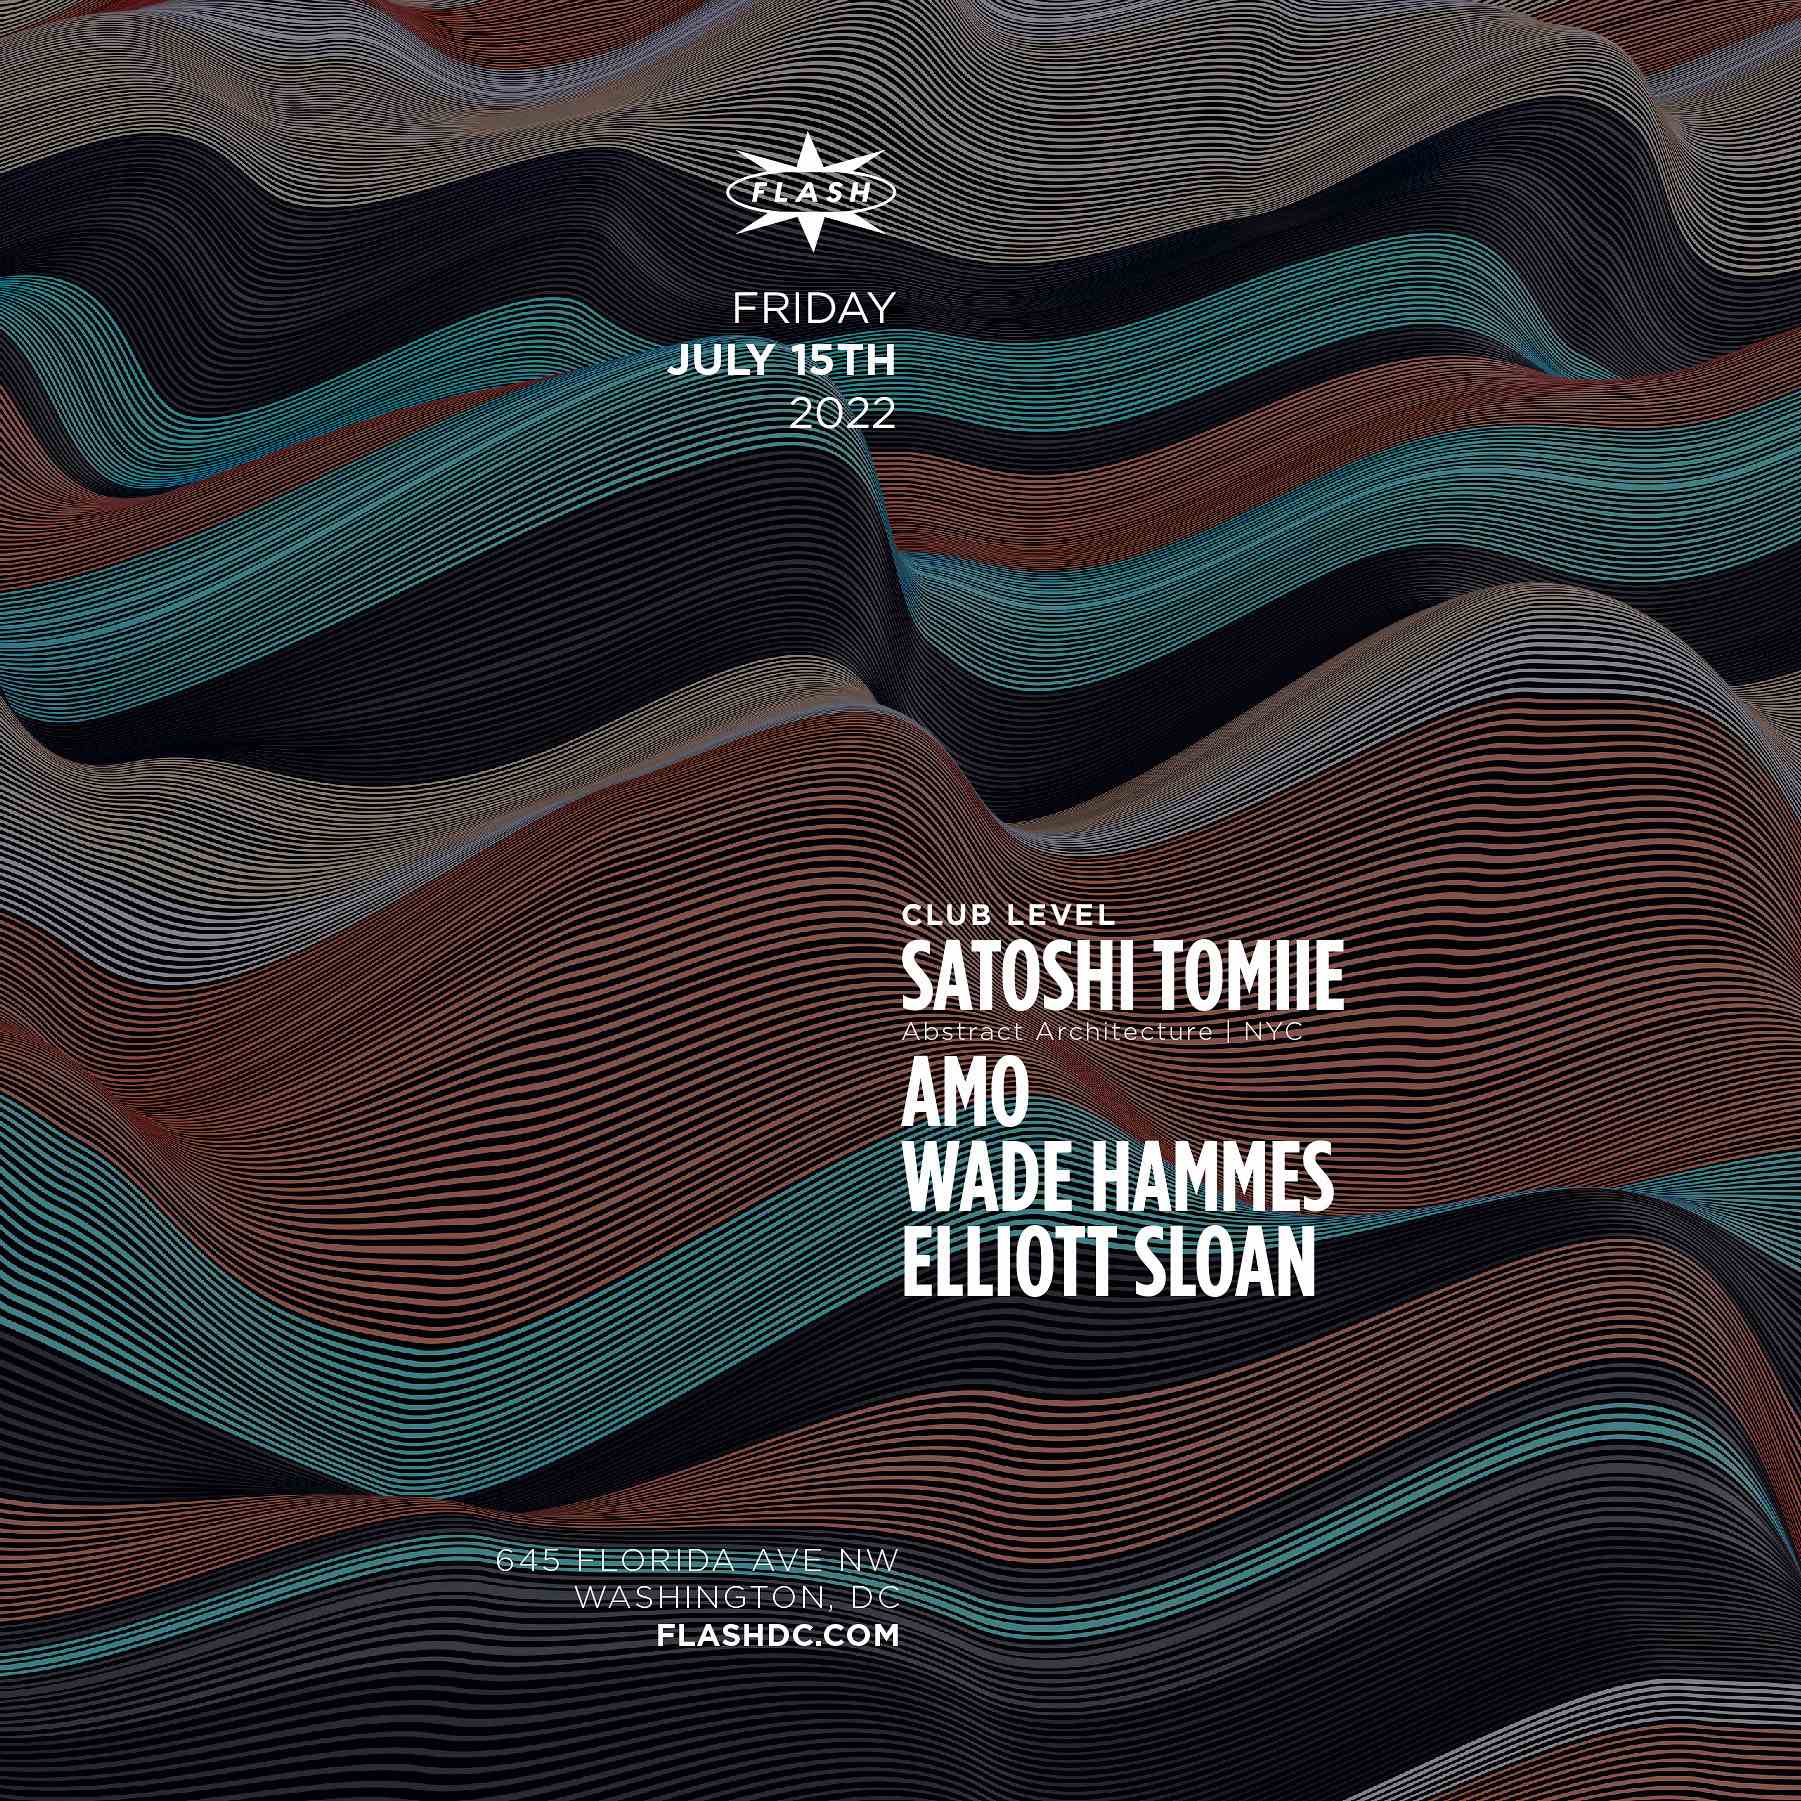 Satoshi Tomiie - Amo [Live] - Wade Hammes - Elliott Sloan event thumbnail